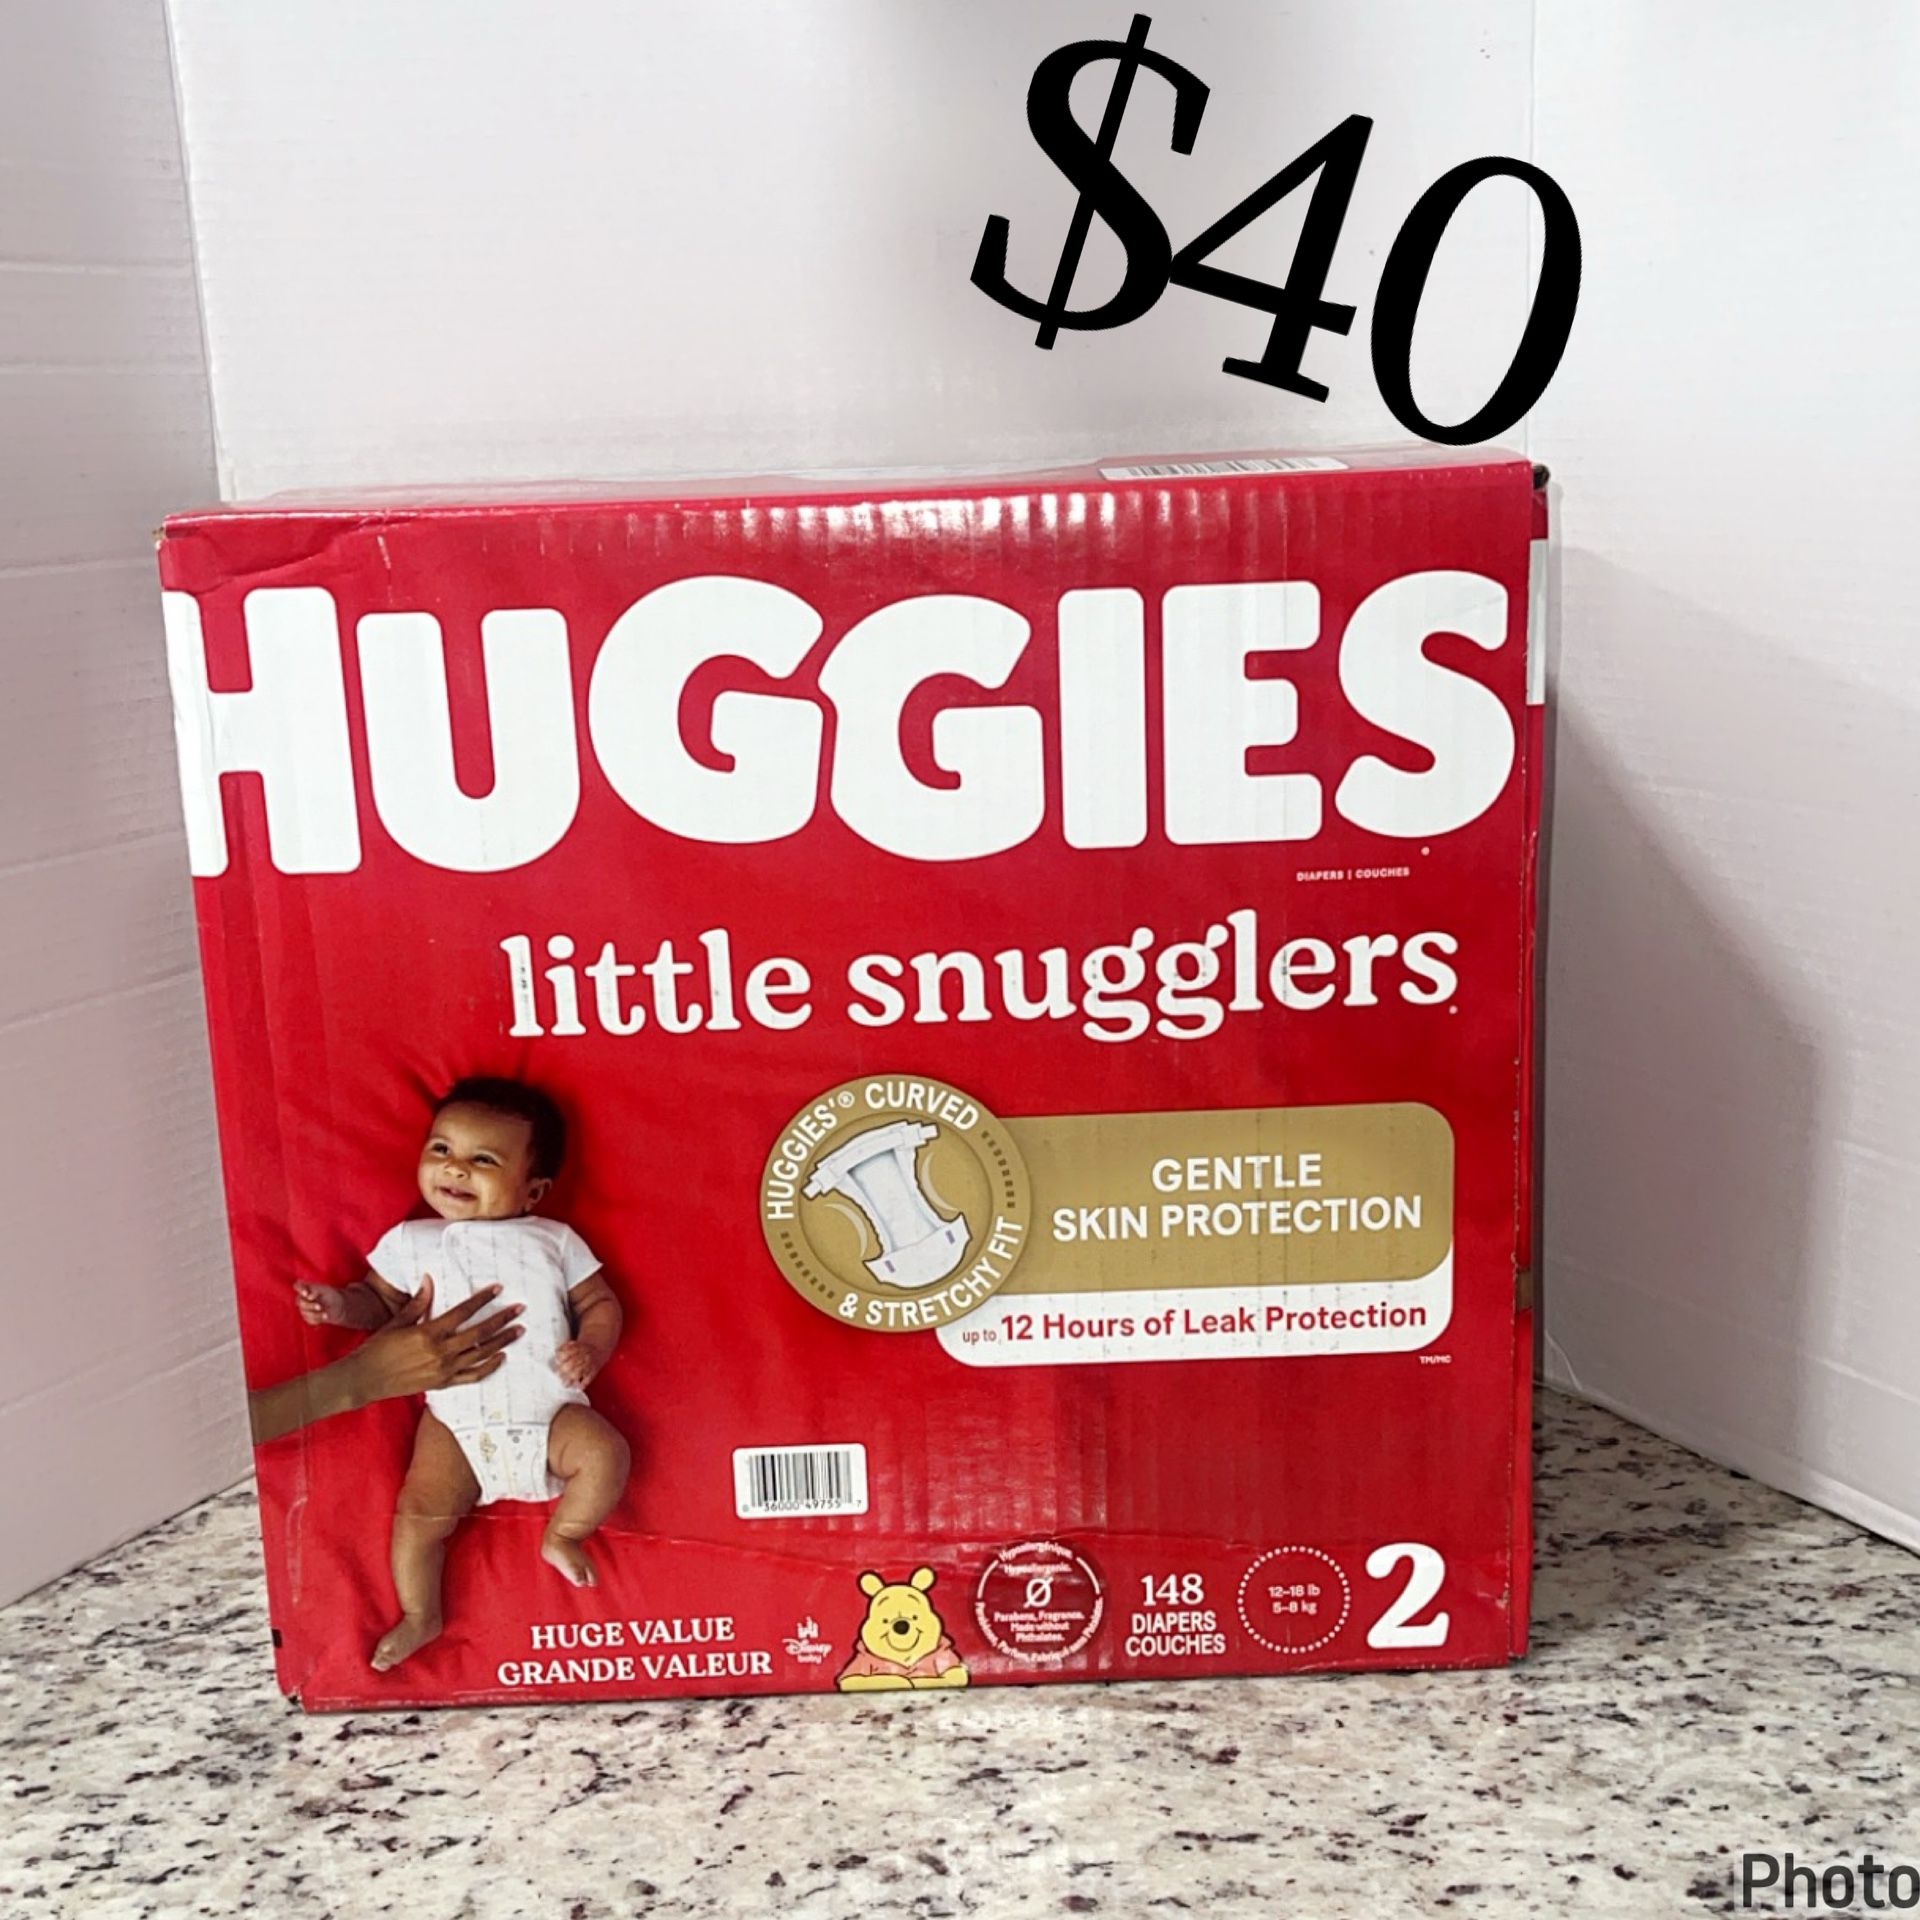 Huggies Little Snugglers size 2